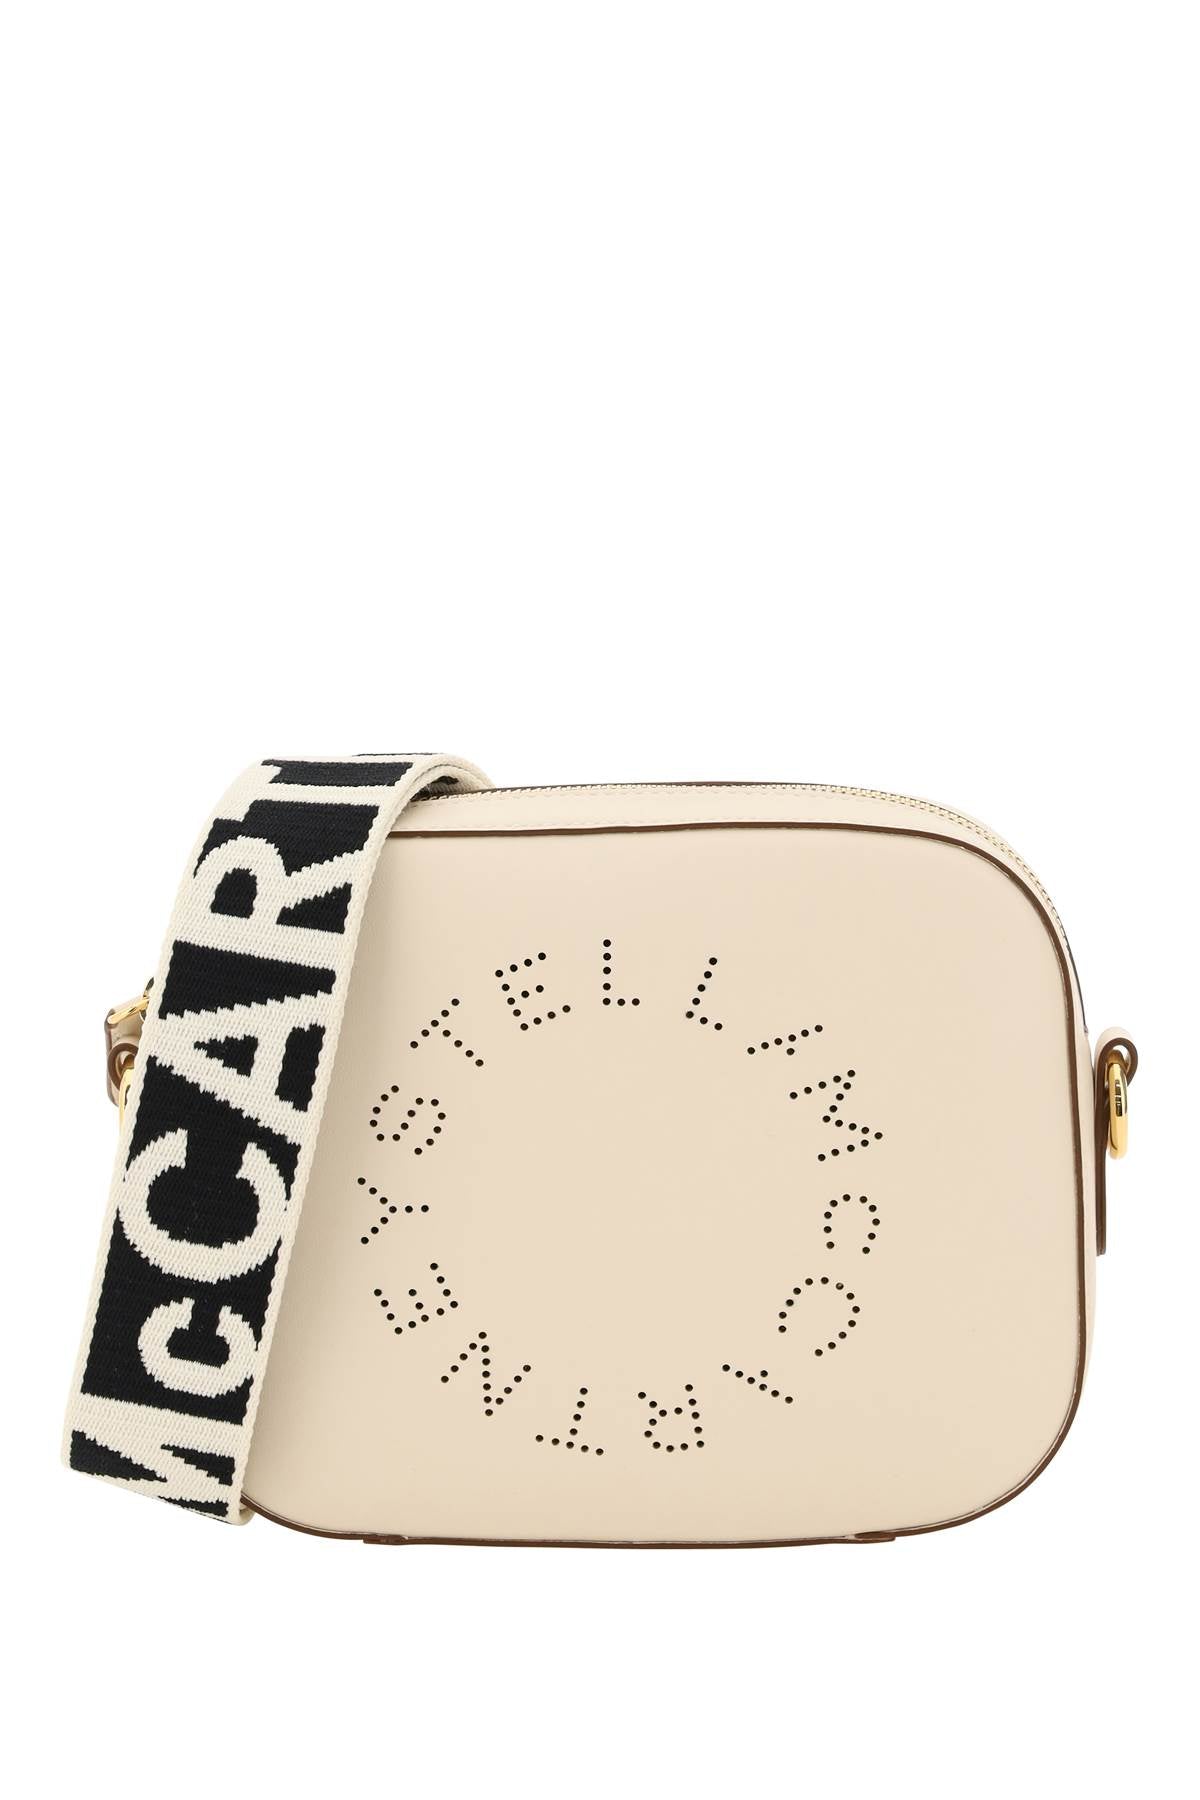 Stella Mccartney Camera Bag With Perforated Stella Logo-Stella McCartney-Urbanheer